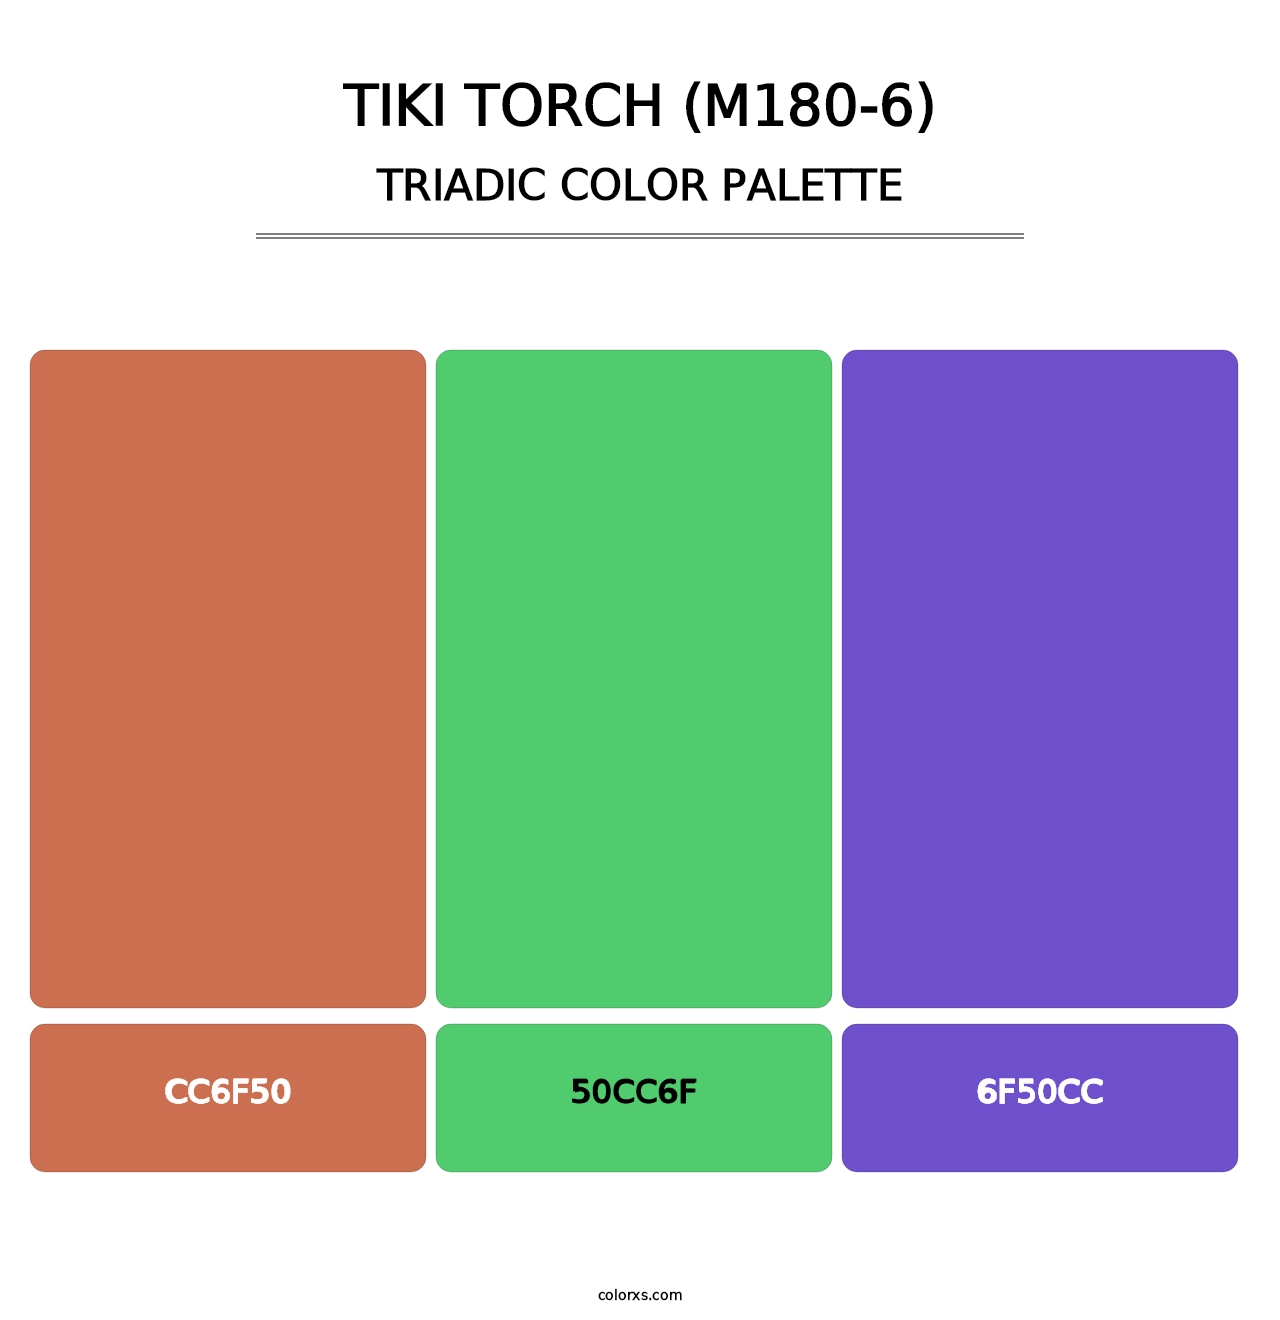 Tiki Torch (M180-6) - Triadic Color Palette